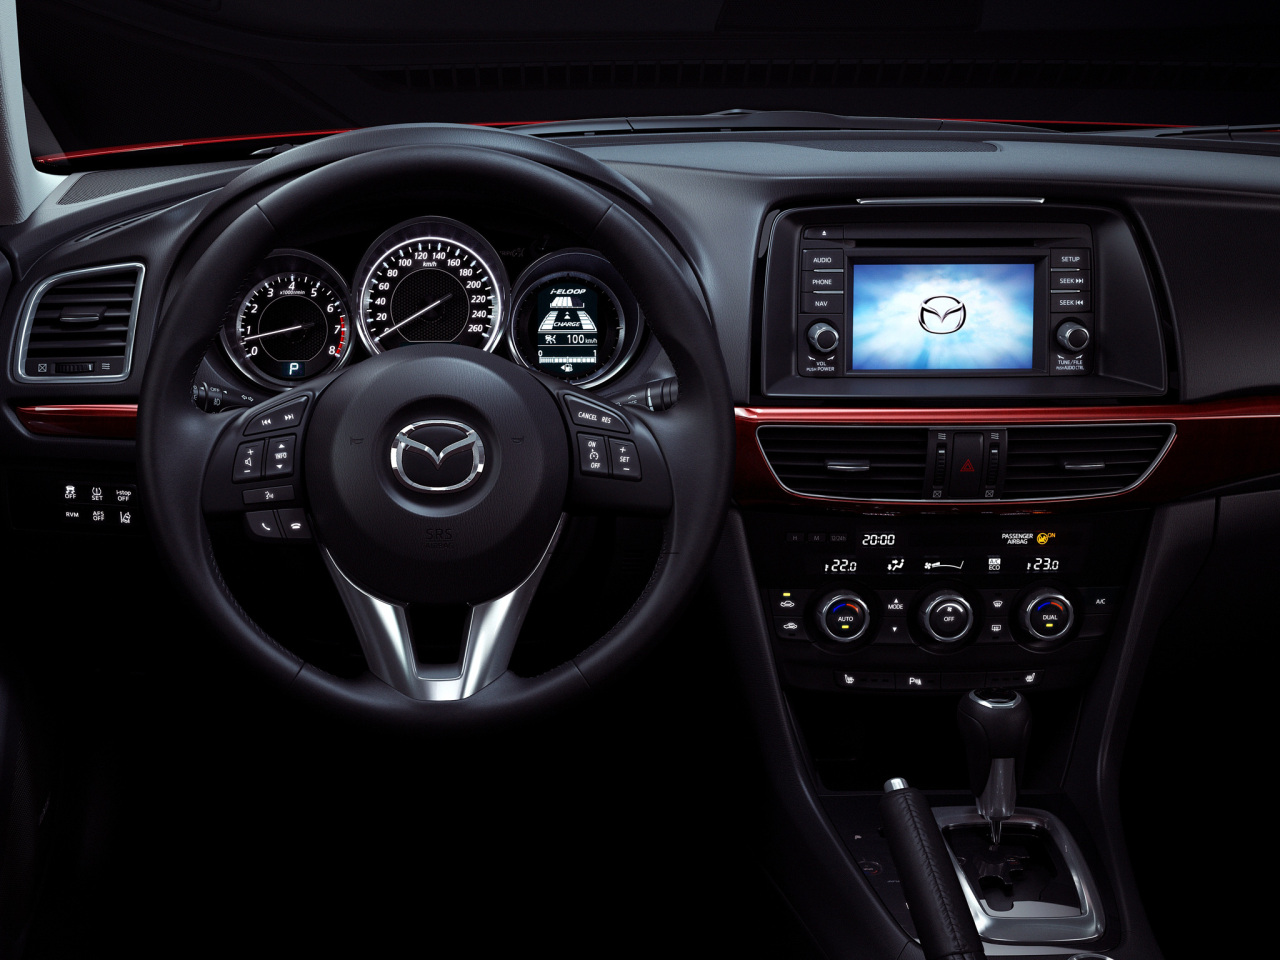 Mazda 6 2015 interior pantalla touch